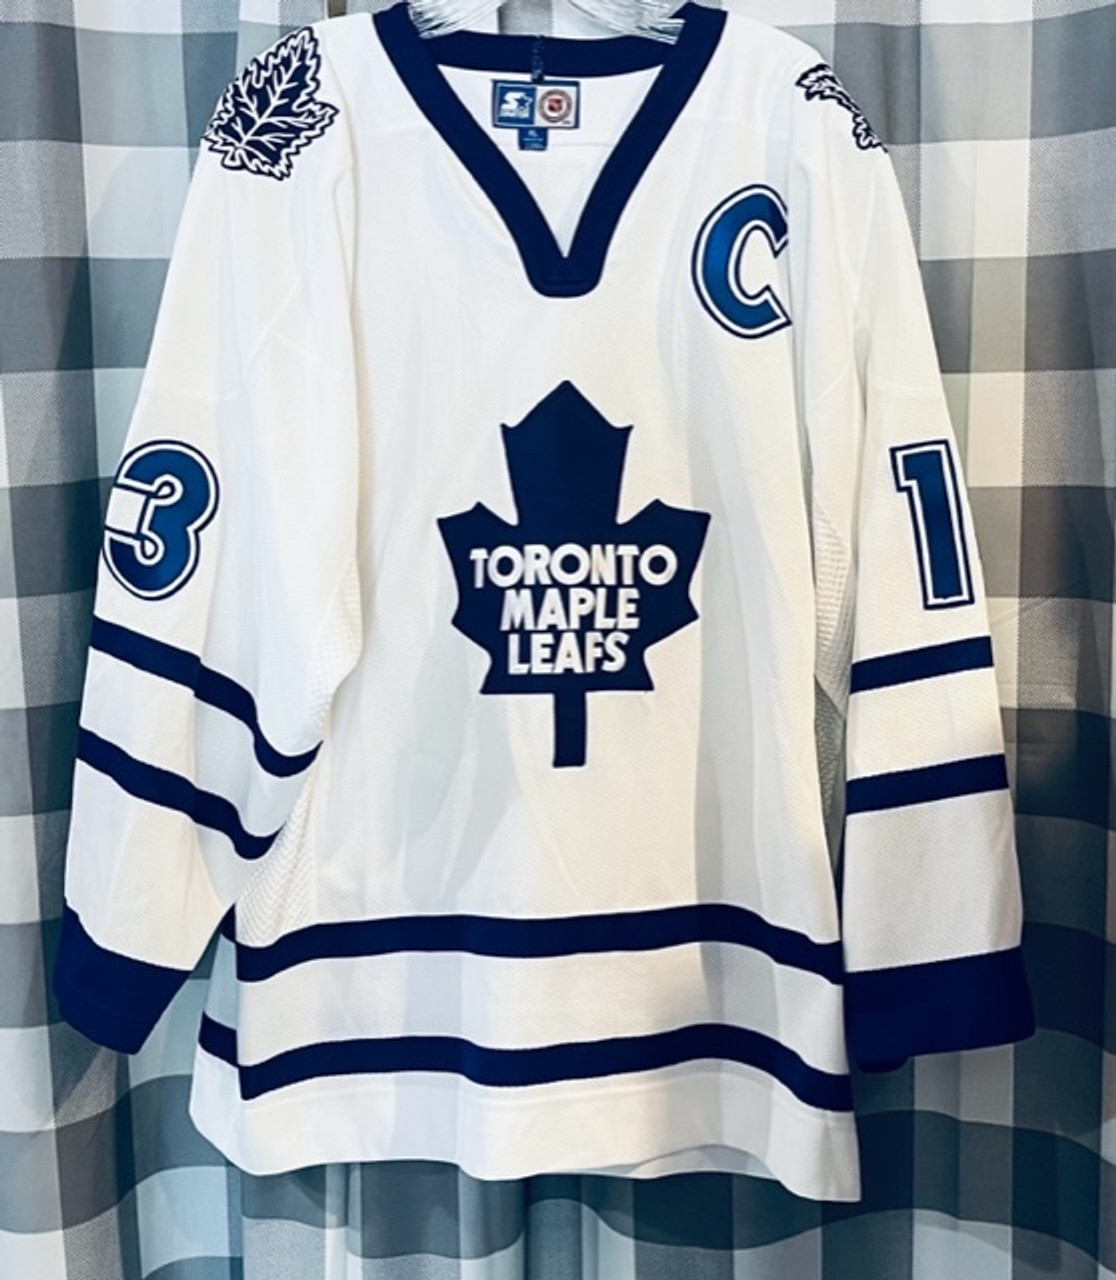 Vintage Toronto Maple Leafs Practice Jersey